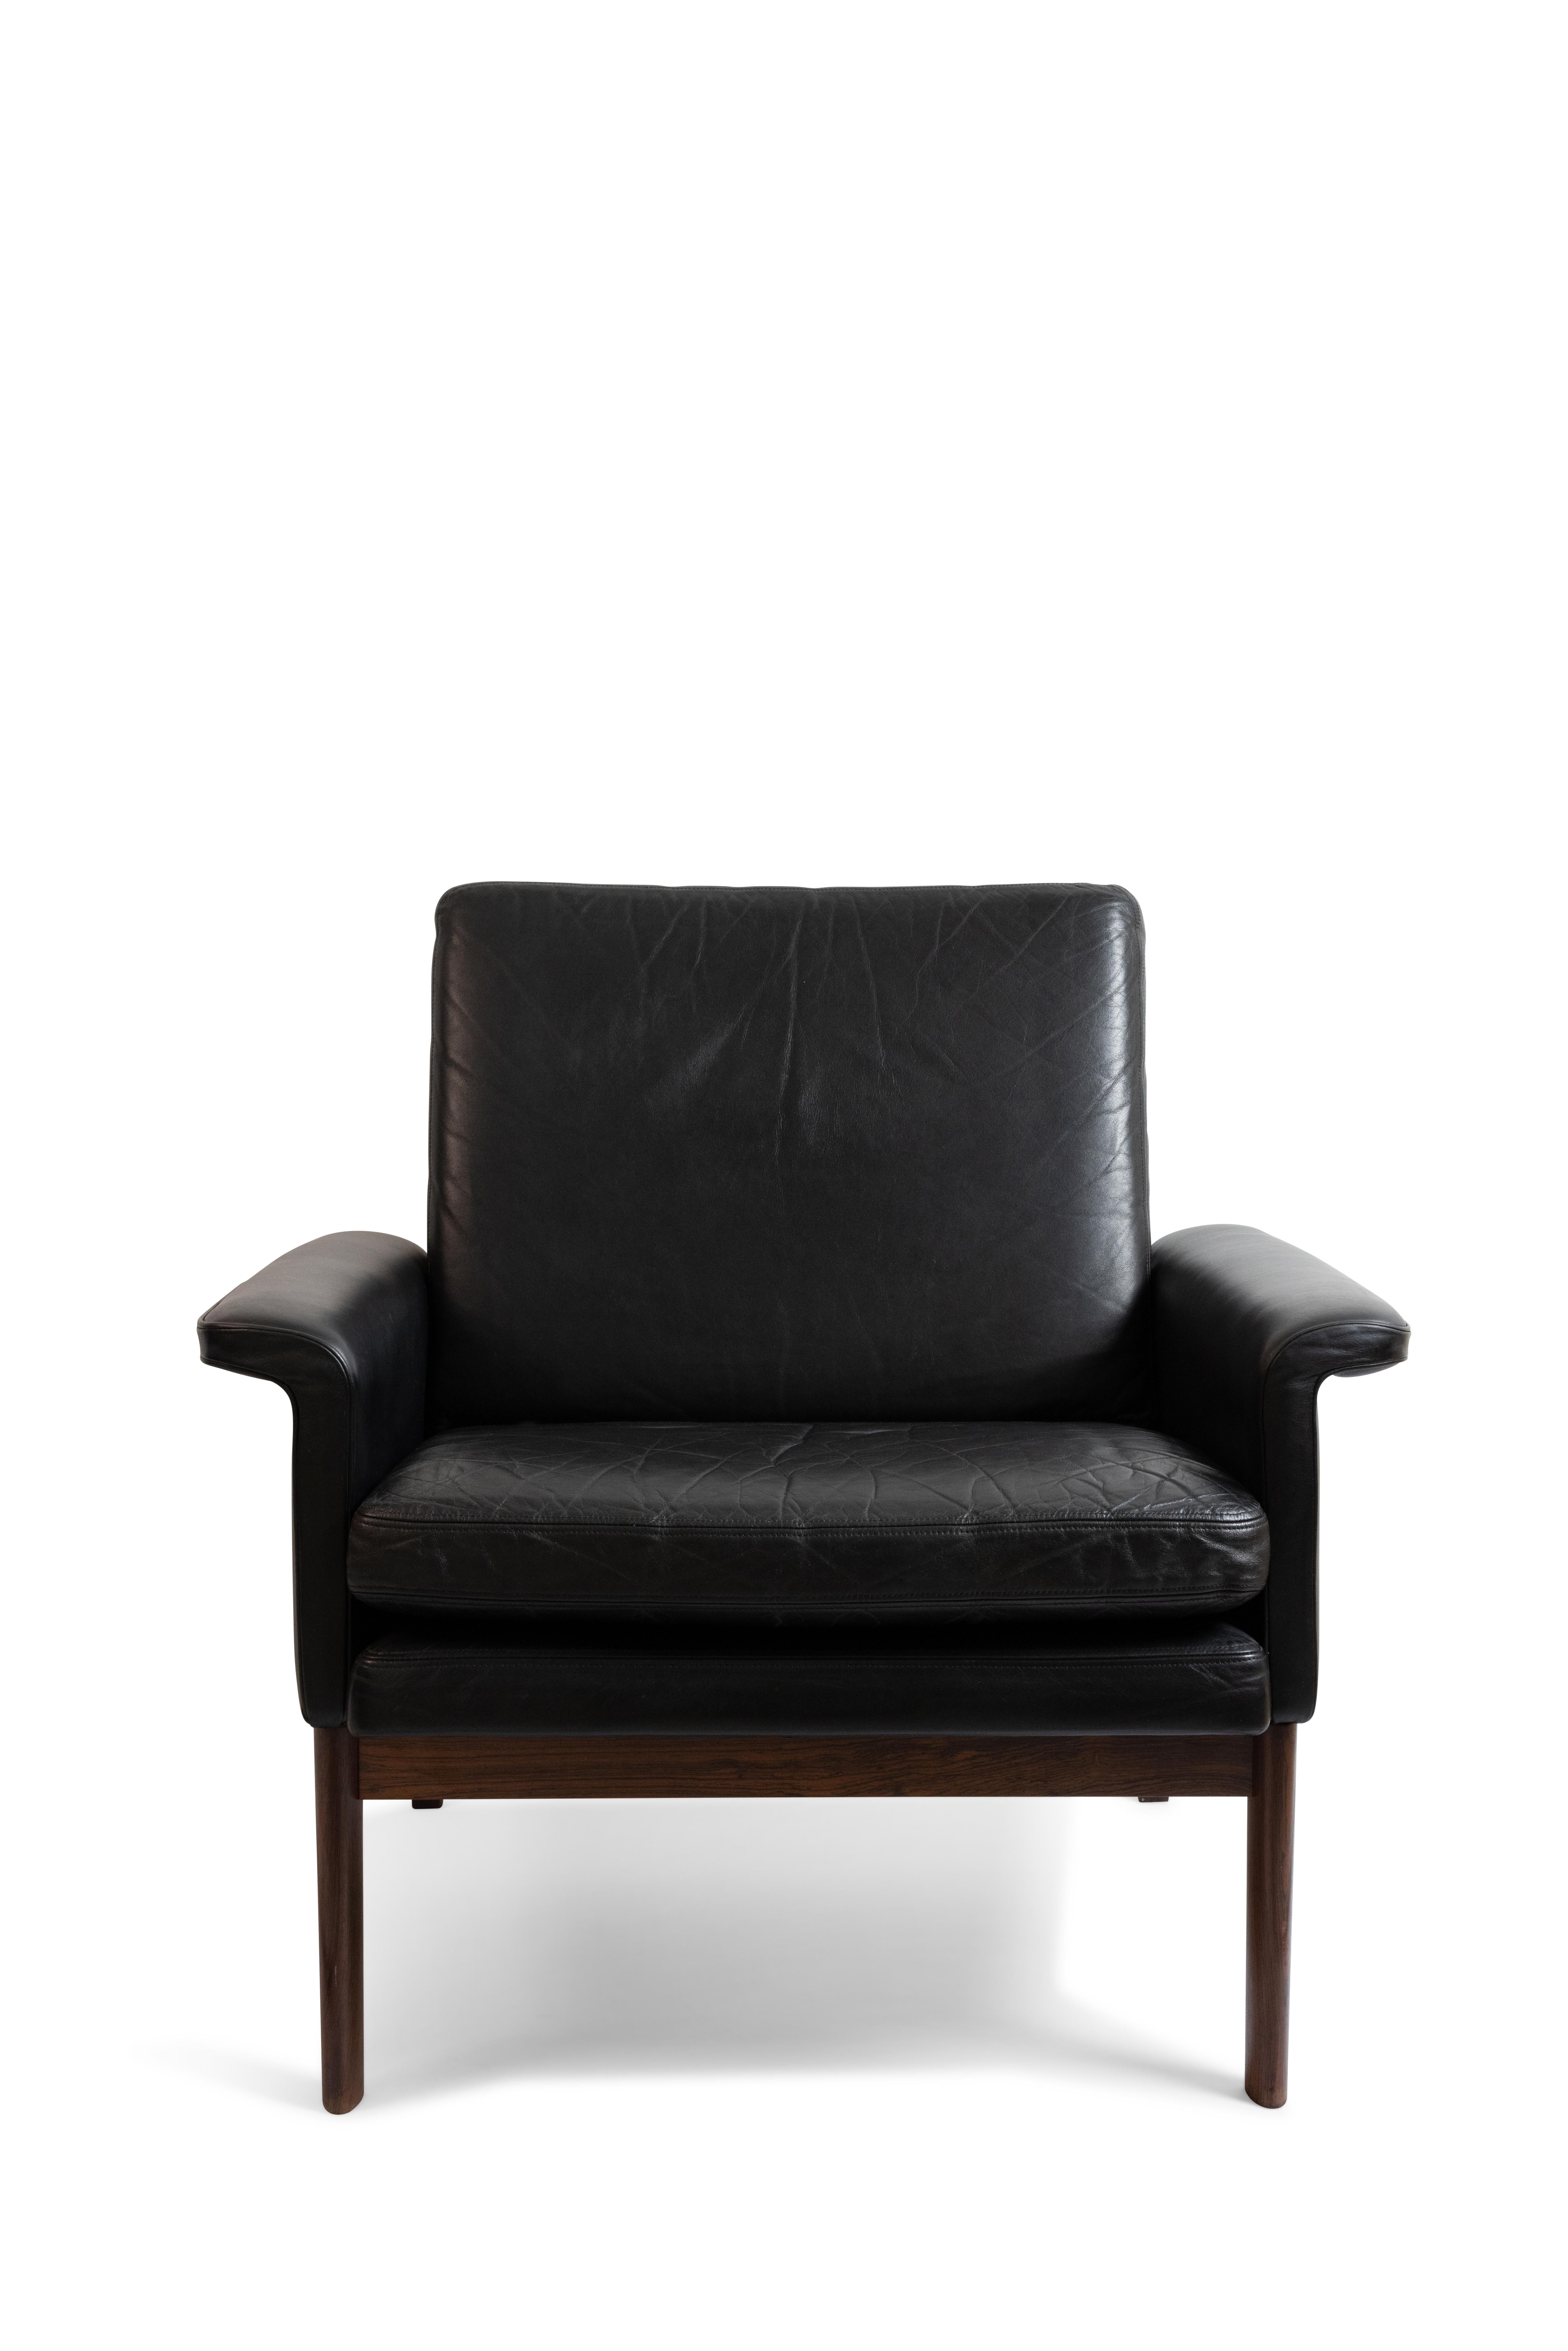 Finn Juhl Three Seat Sofa with Original Black Leather, Model 218/3, Denmark For Sale 2